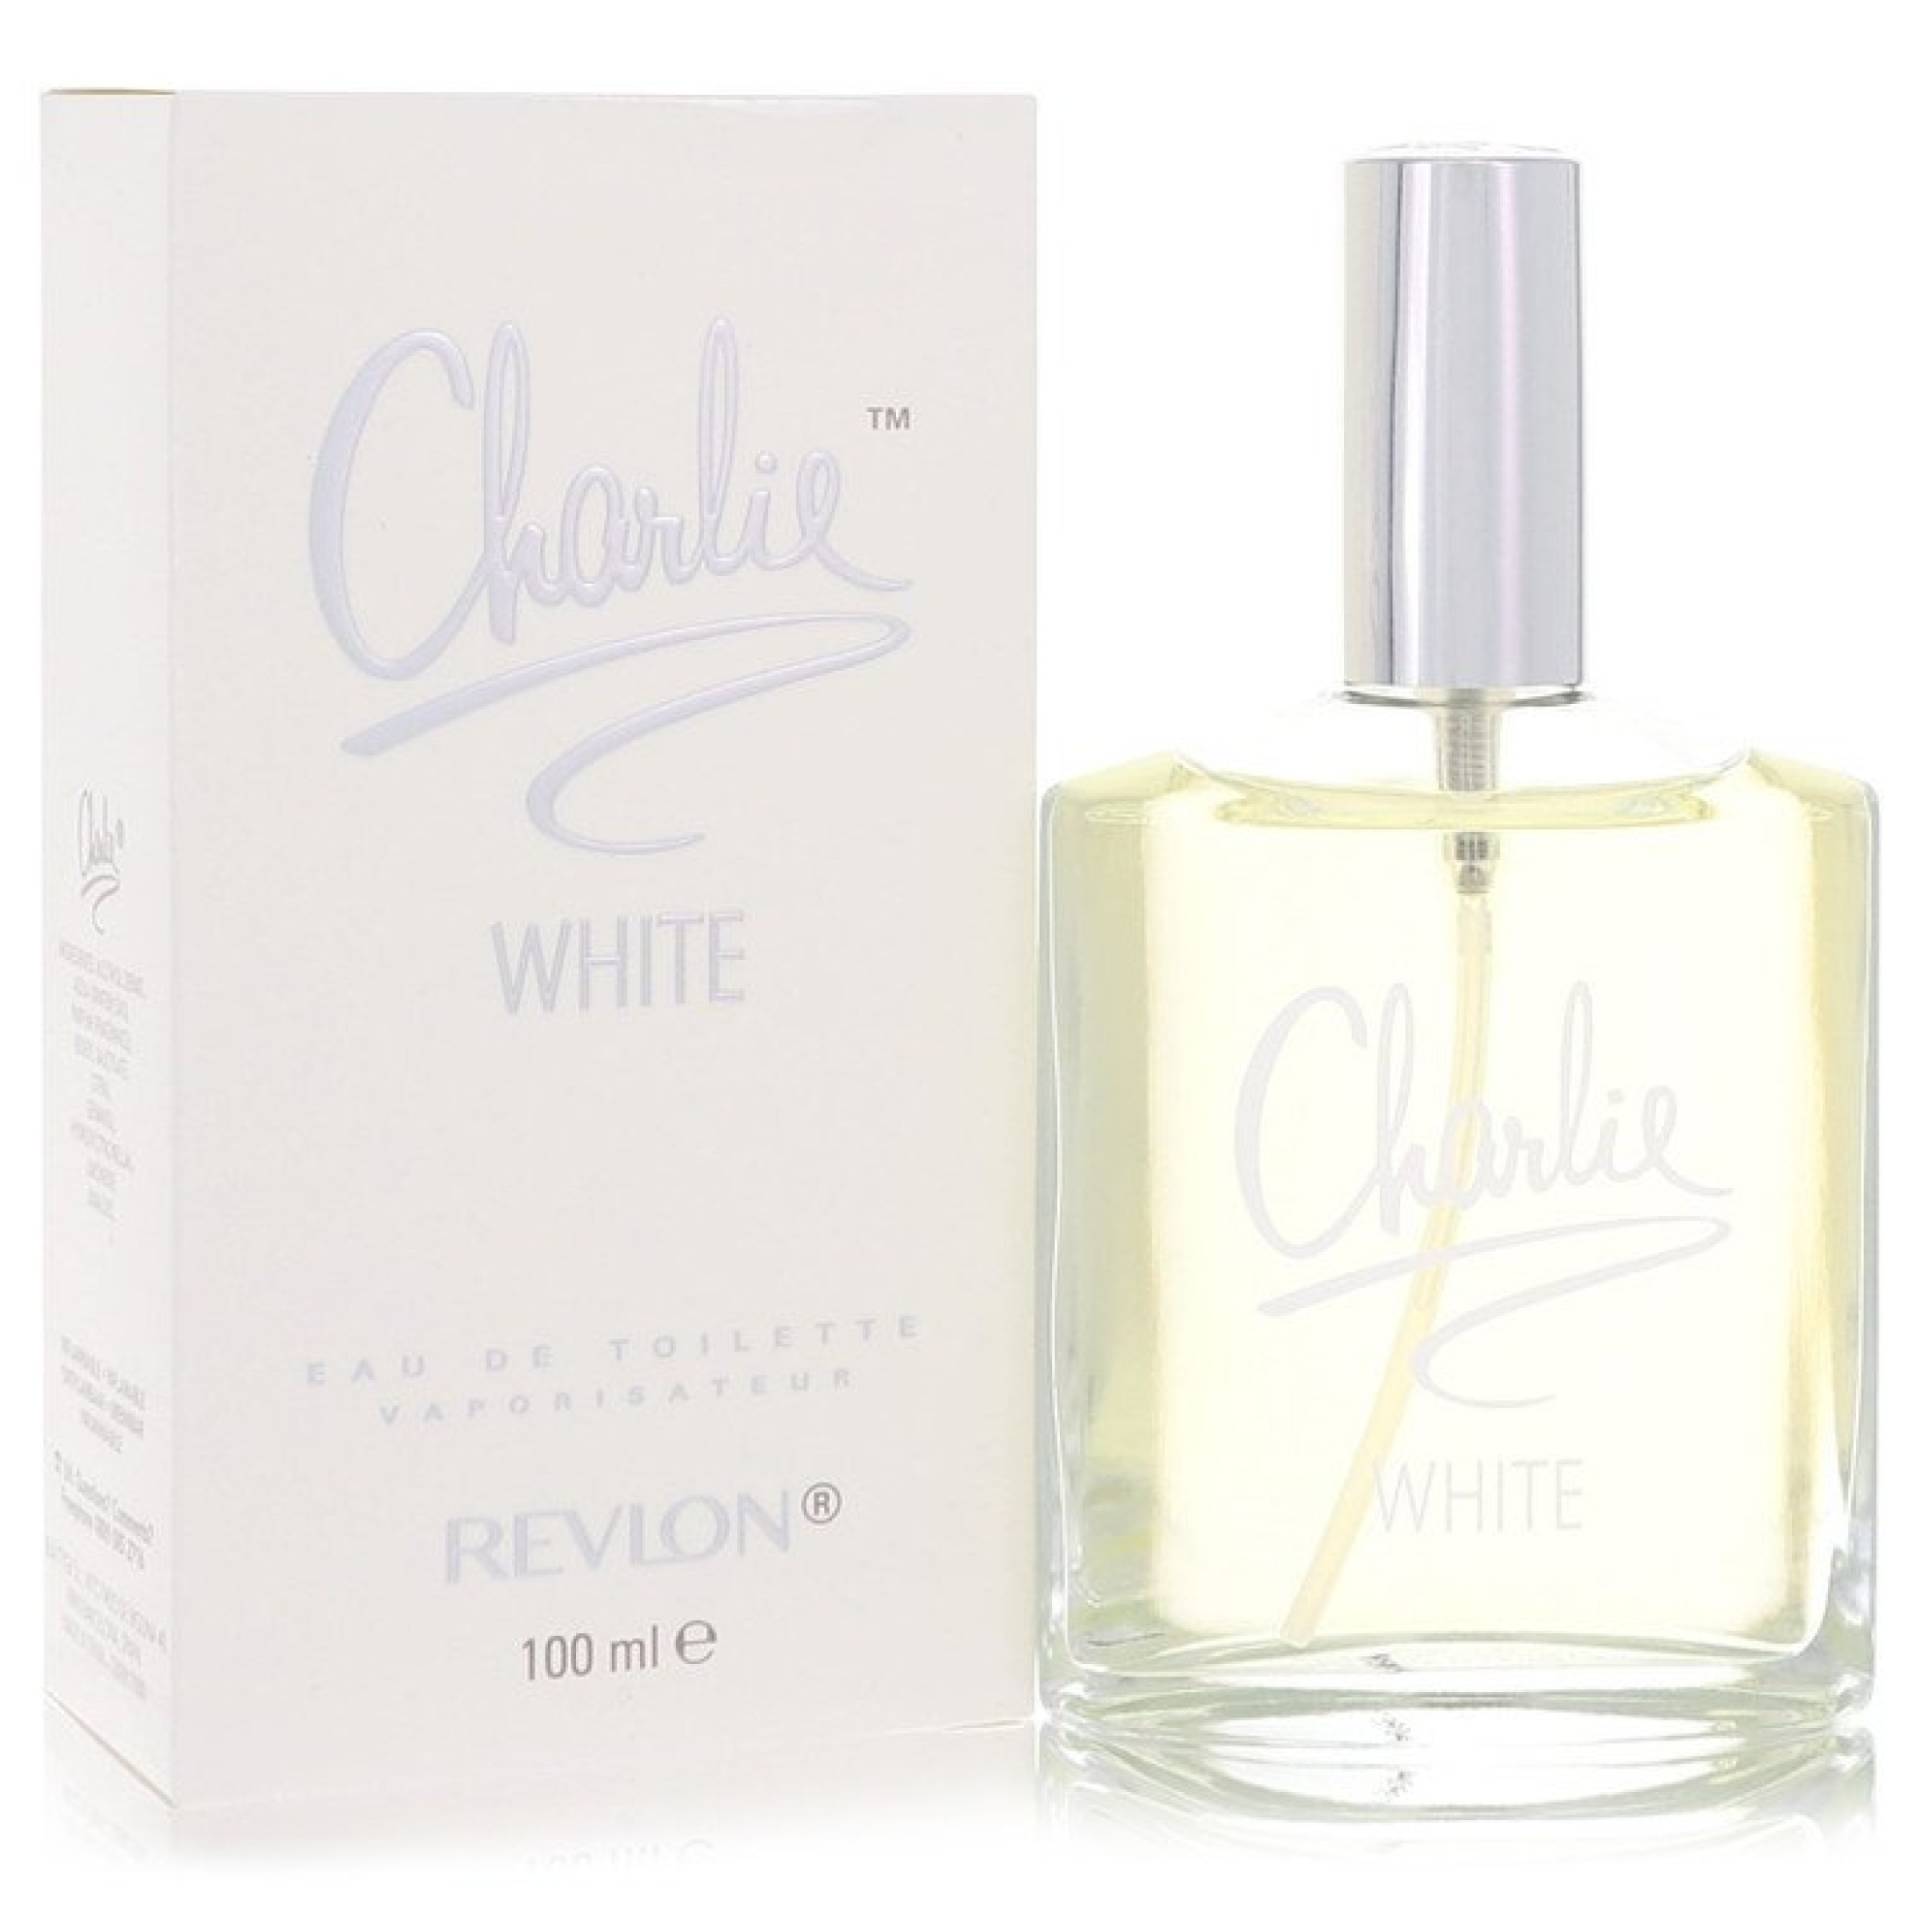 Revlon CHARLIE WHITE Eau De Toilette Spray 100 ml von Revlon